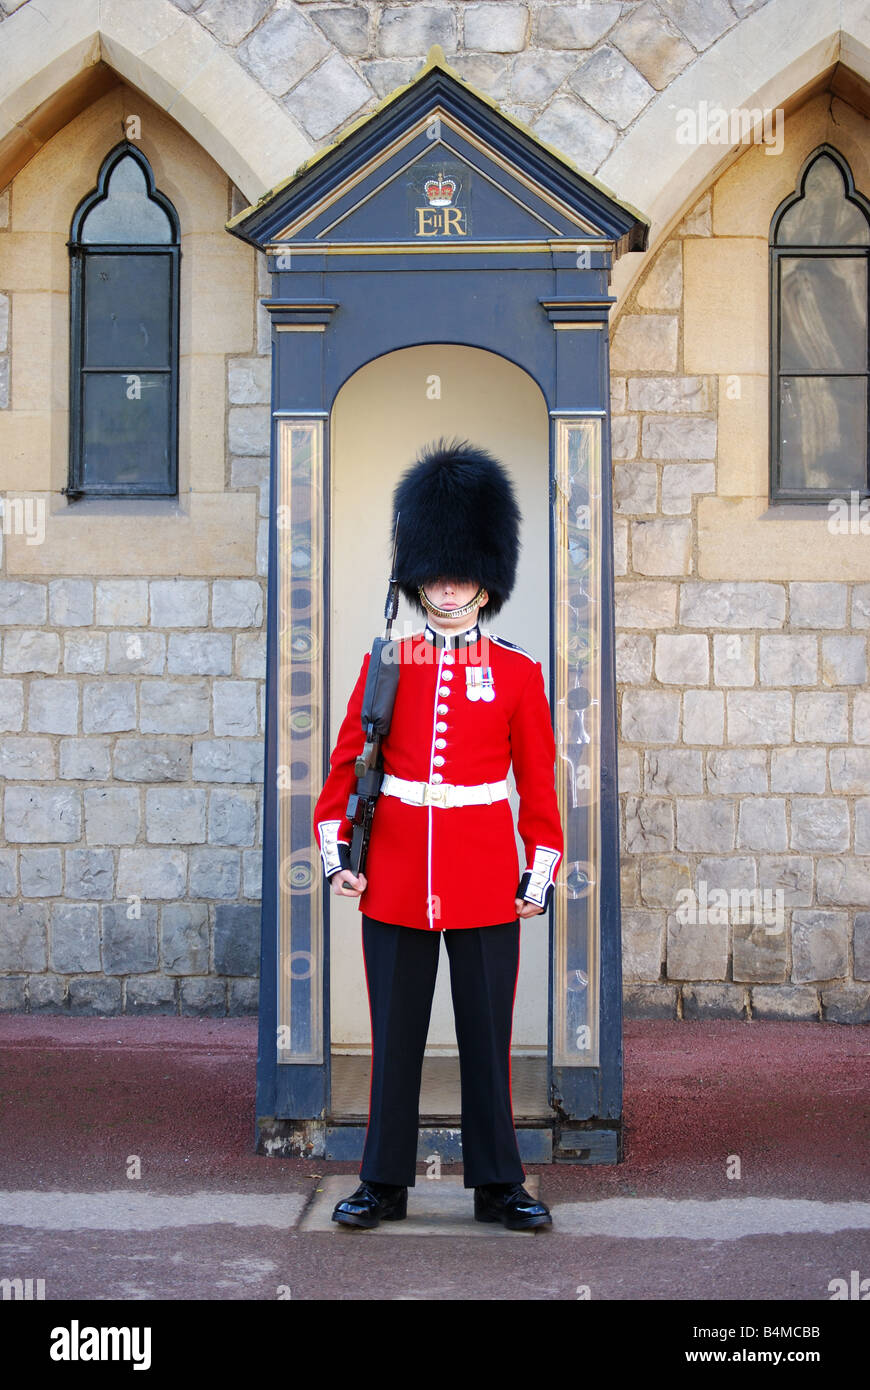 Queen’s Guard on duty, Lower Ward, Windsor Castle, Windsor, Berkshire, England, United Kingdom Stock Photo